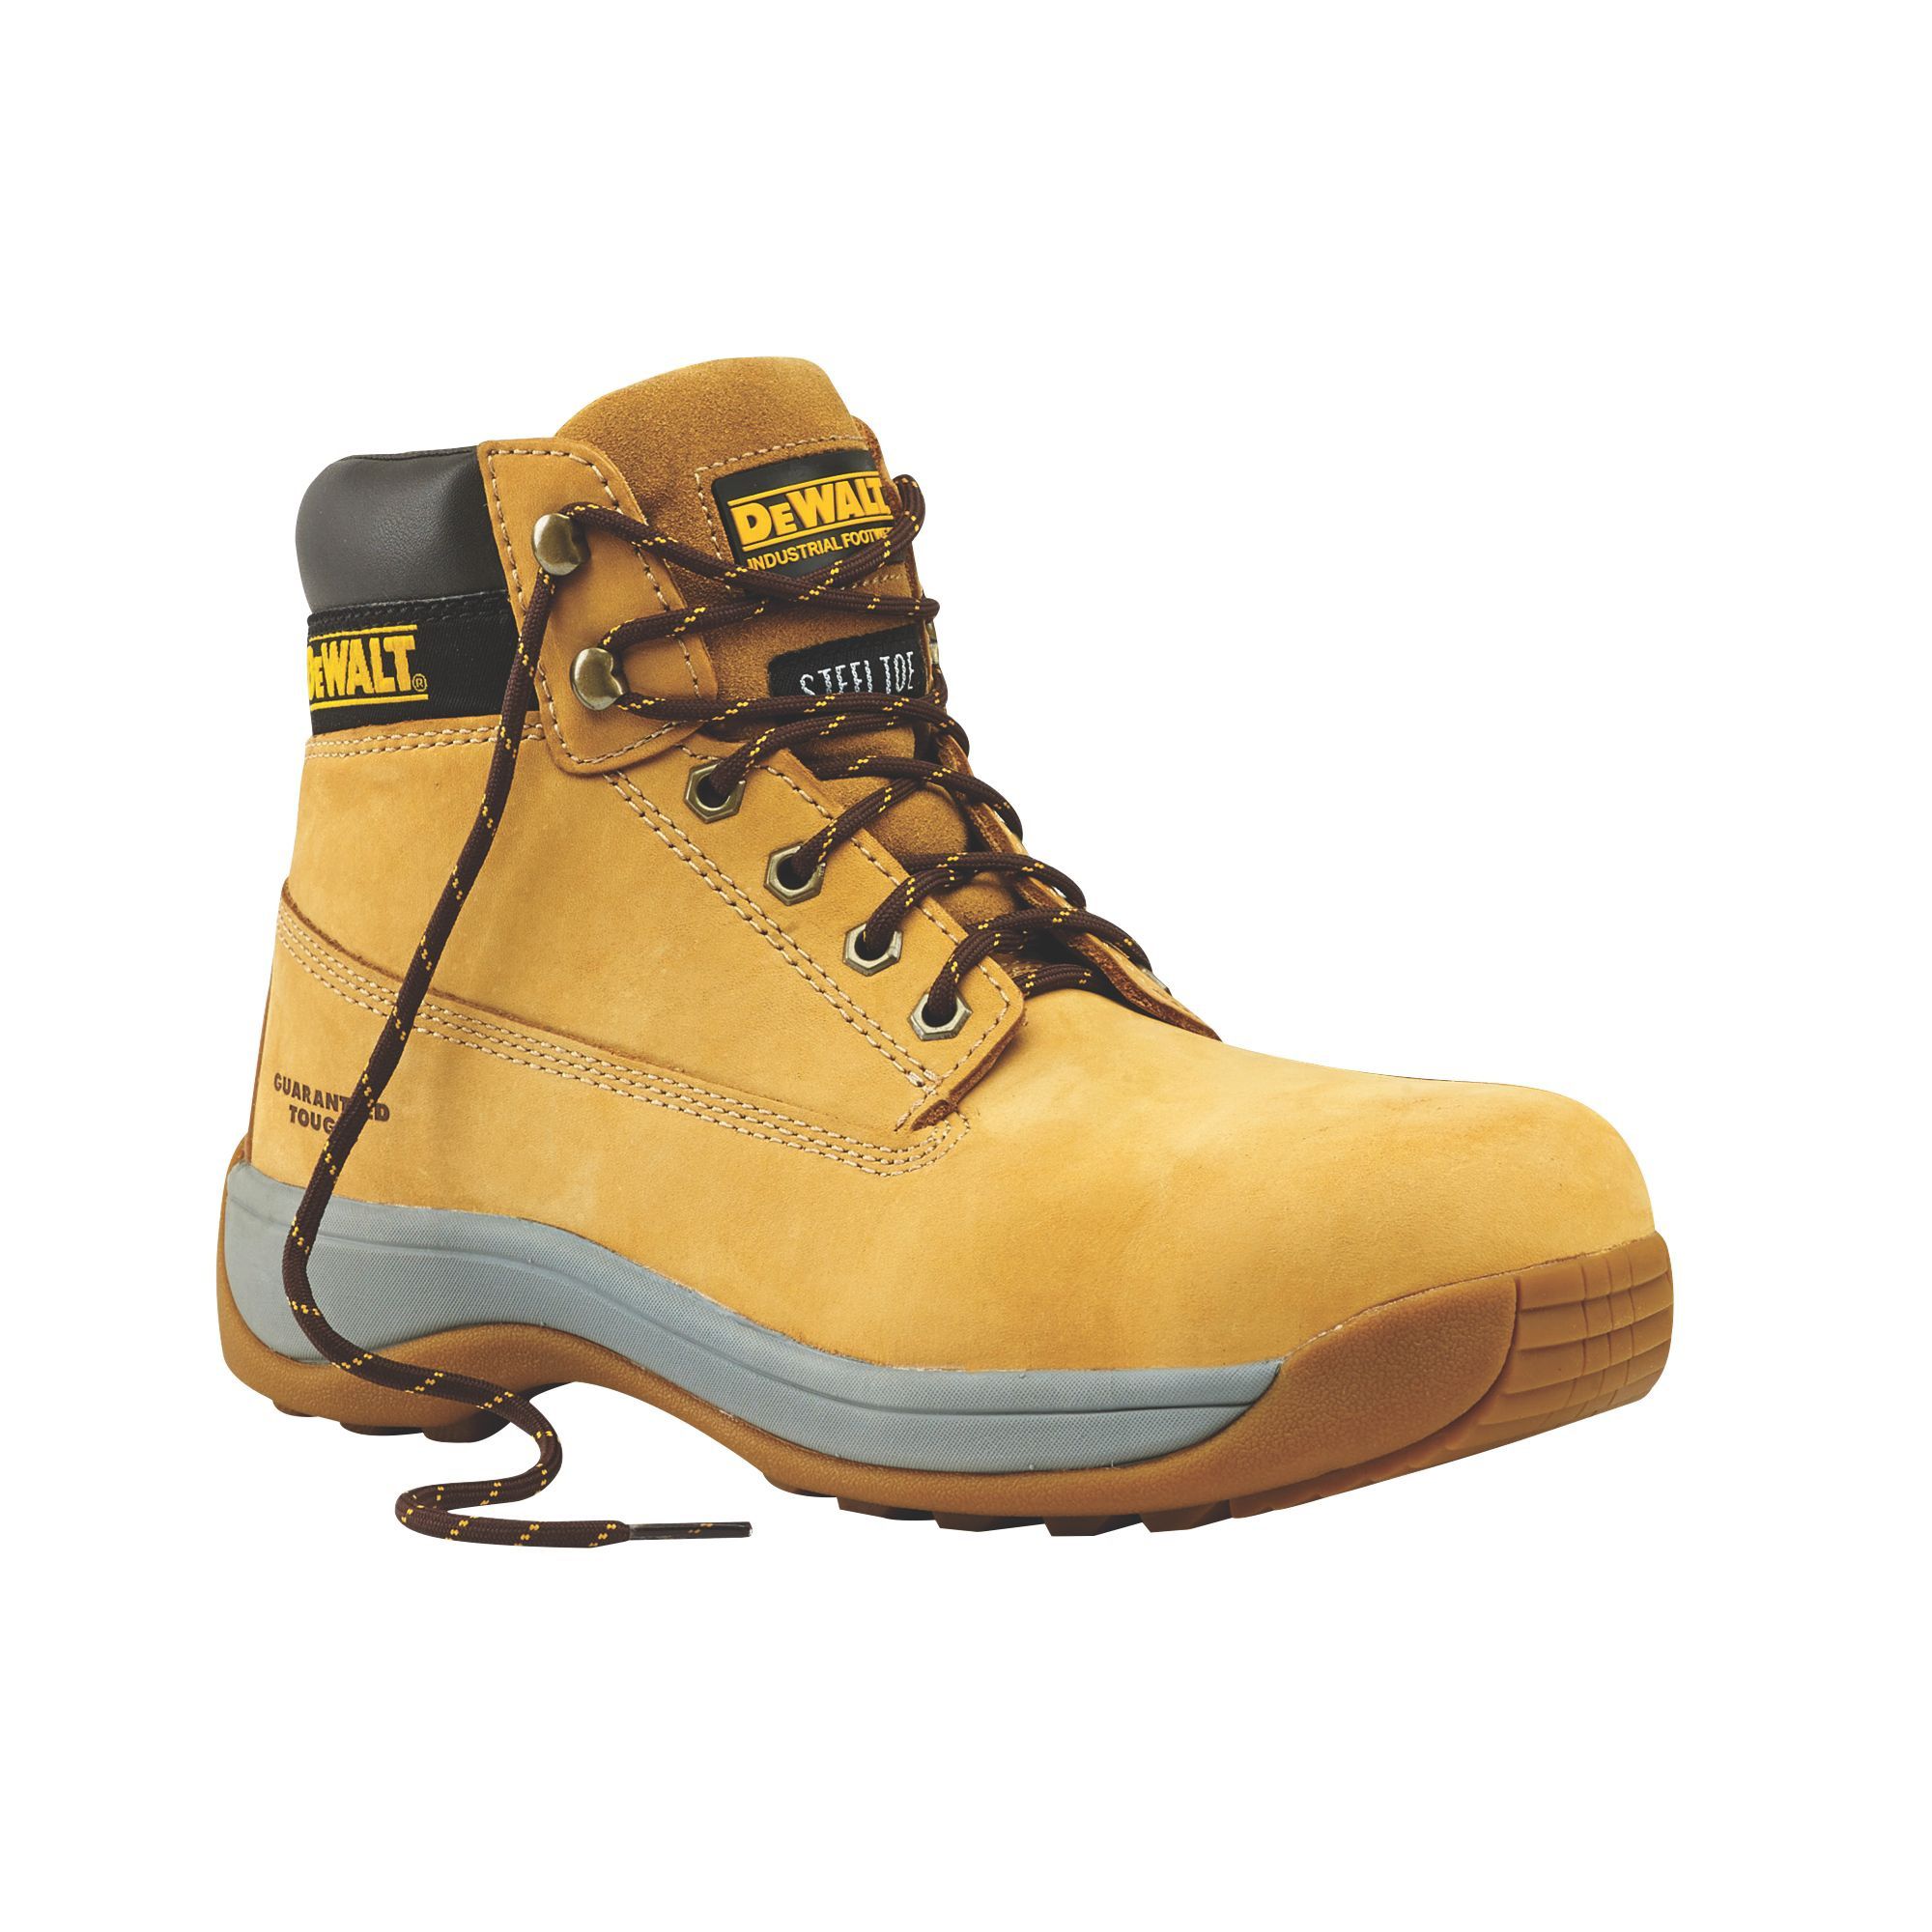 DeWalt Apprentice Men's Wheat Safety boots, Size 9